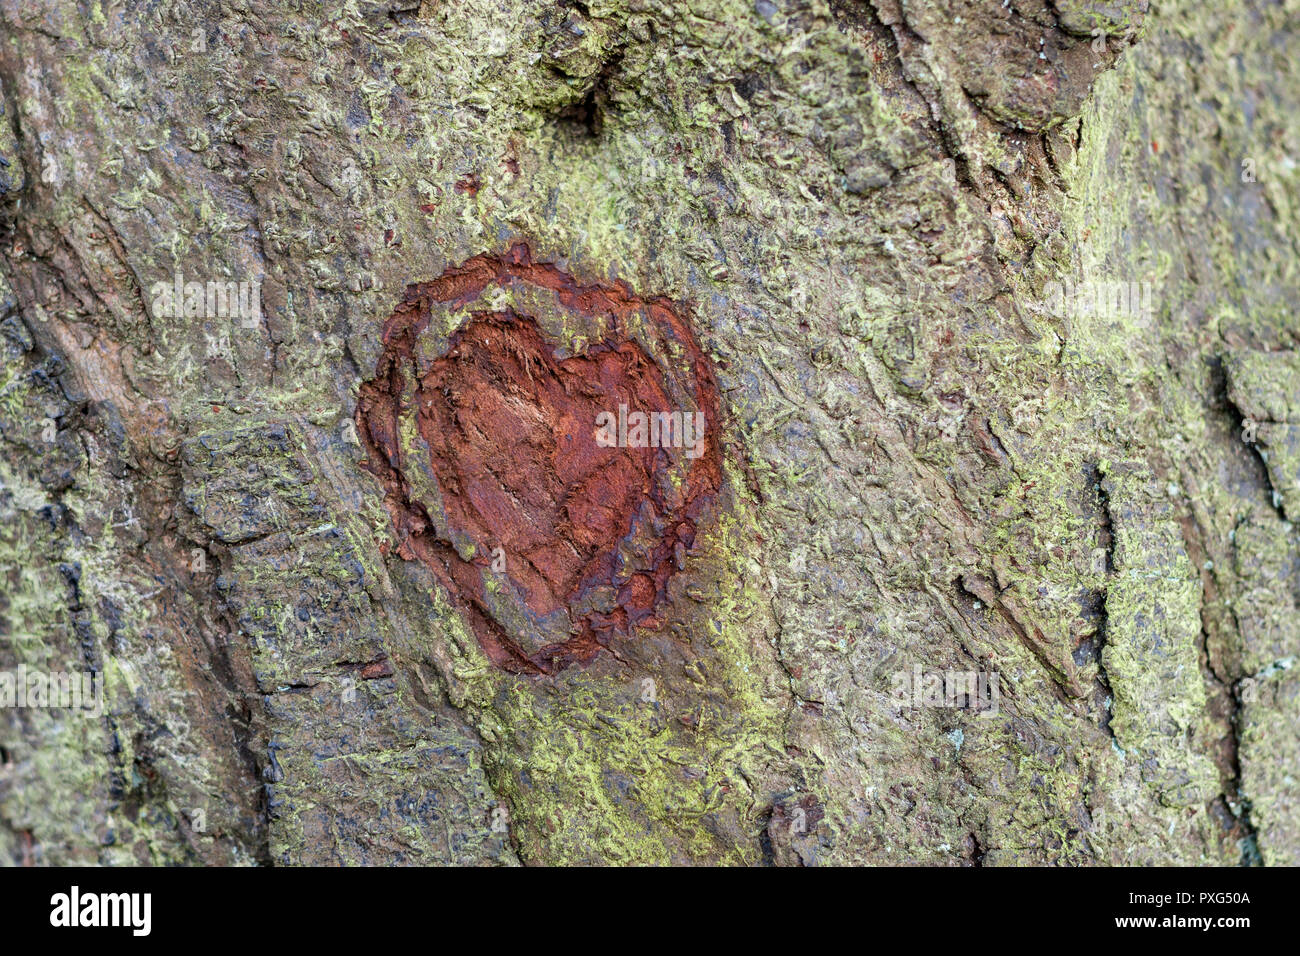 Love heart shape carved into tree bark, England, UK Stock Photo